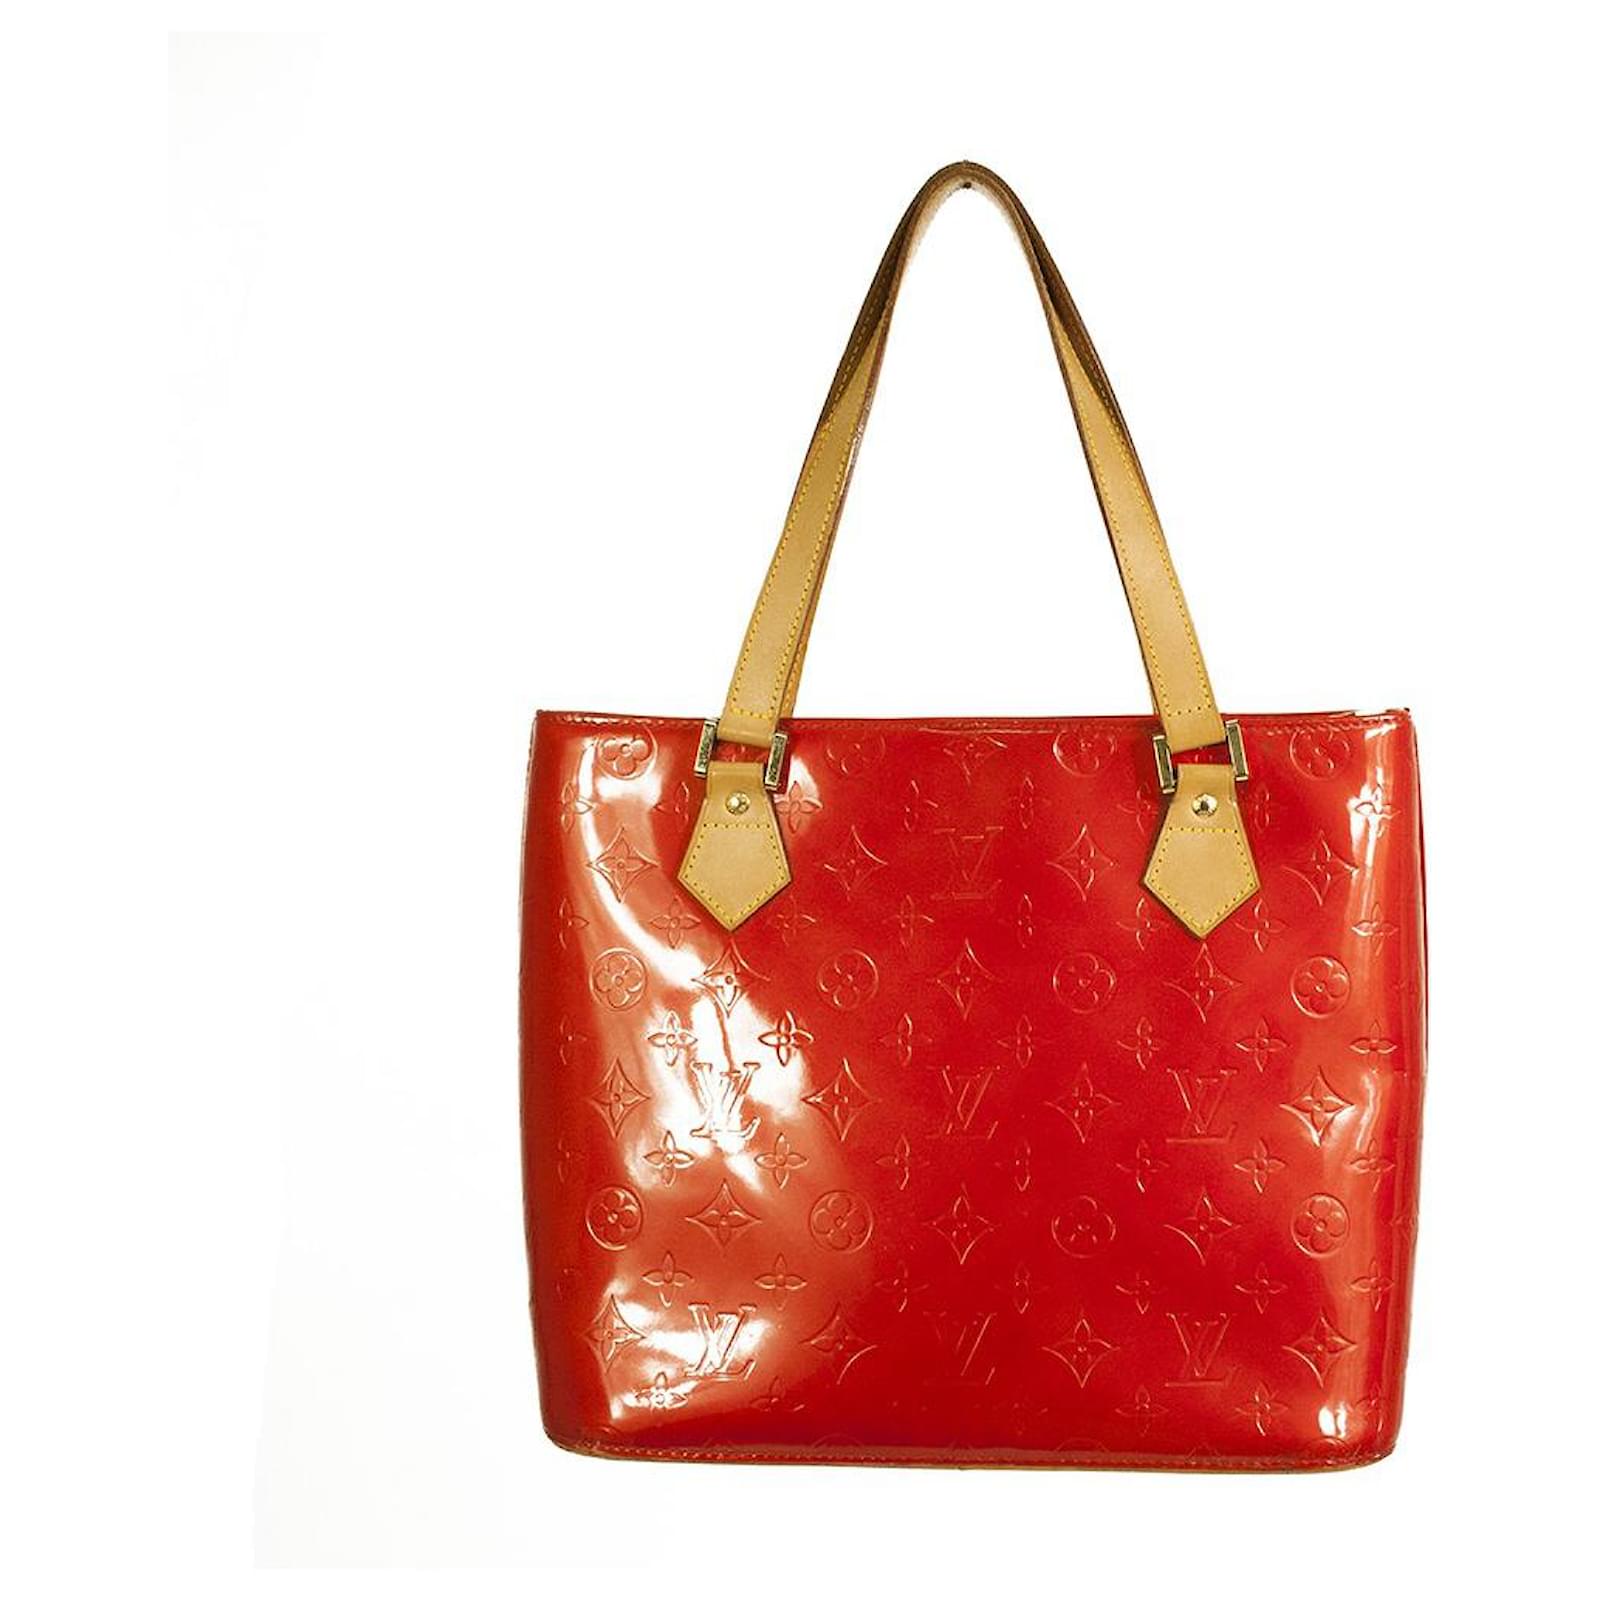 LOUIS VUITTON Houston red gold Vernis Tote Bag Shoulder Bag Patent